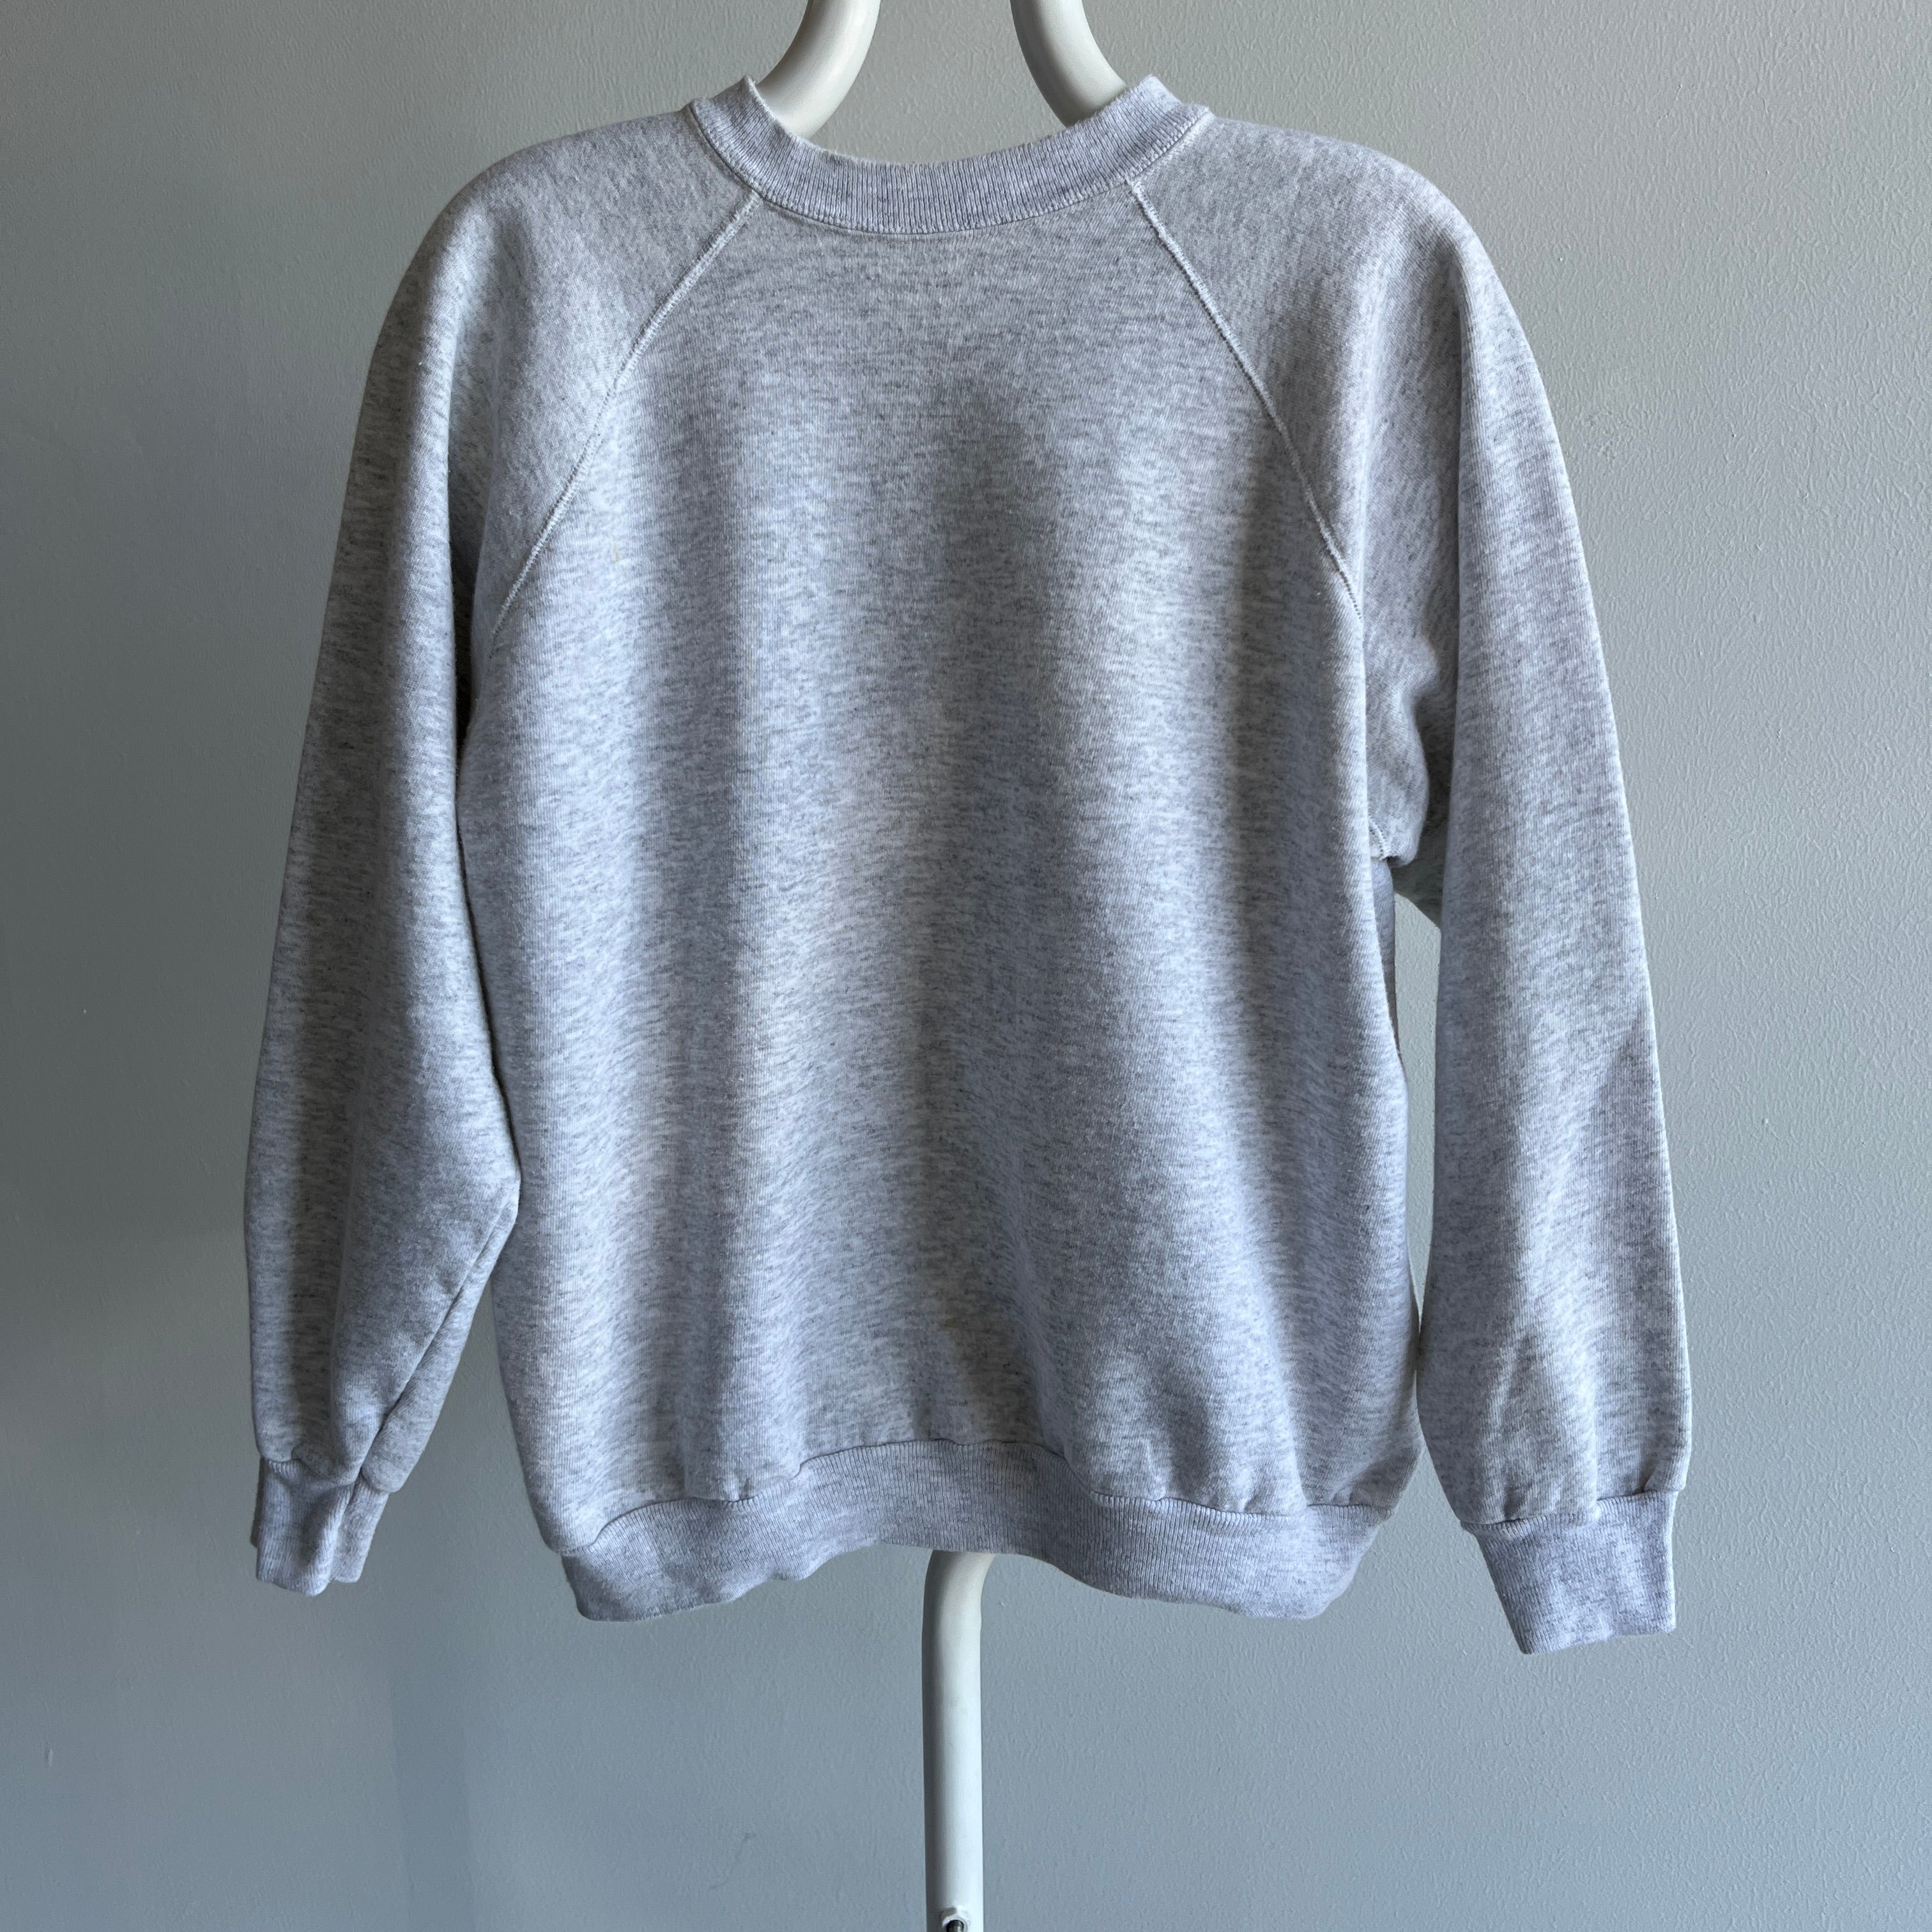 1980/90s Light Gray Blank Sweatshirt with Staining